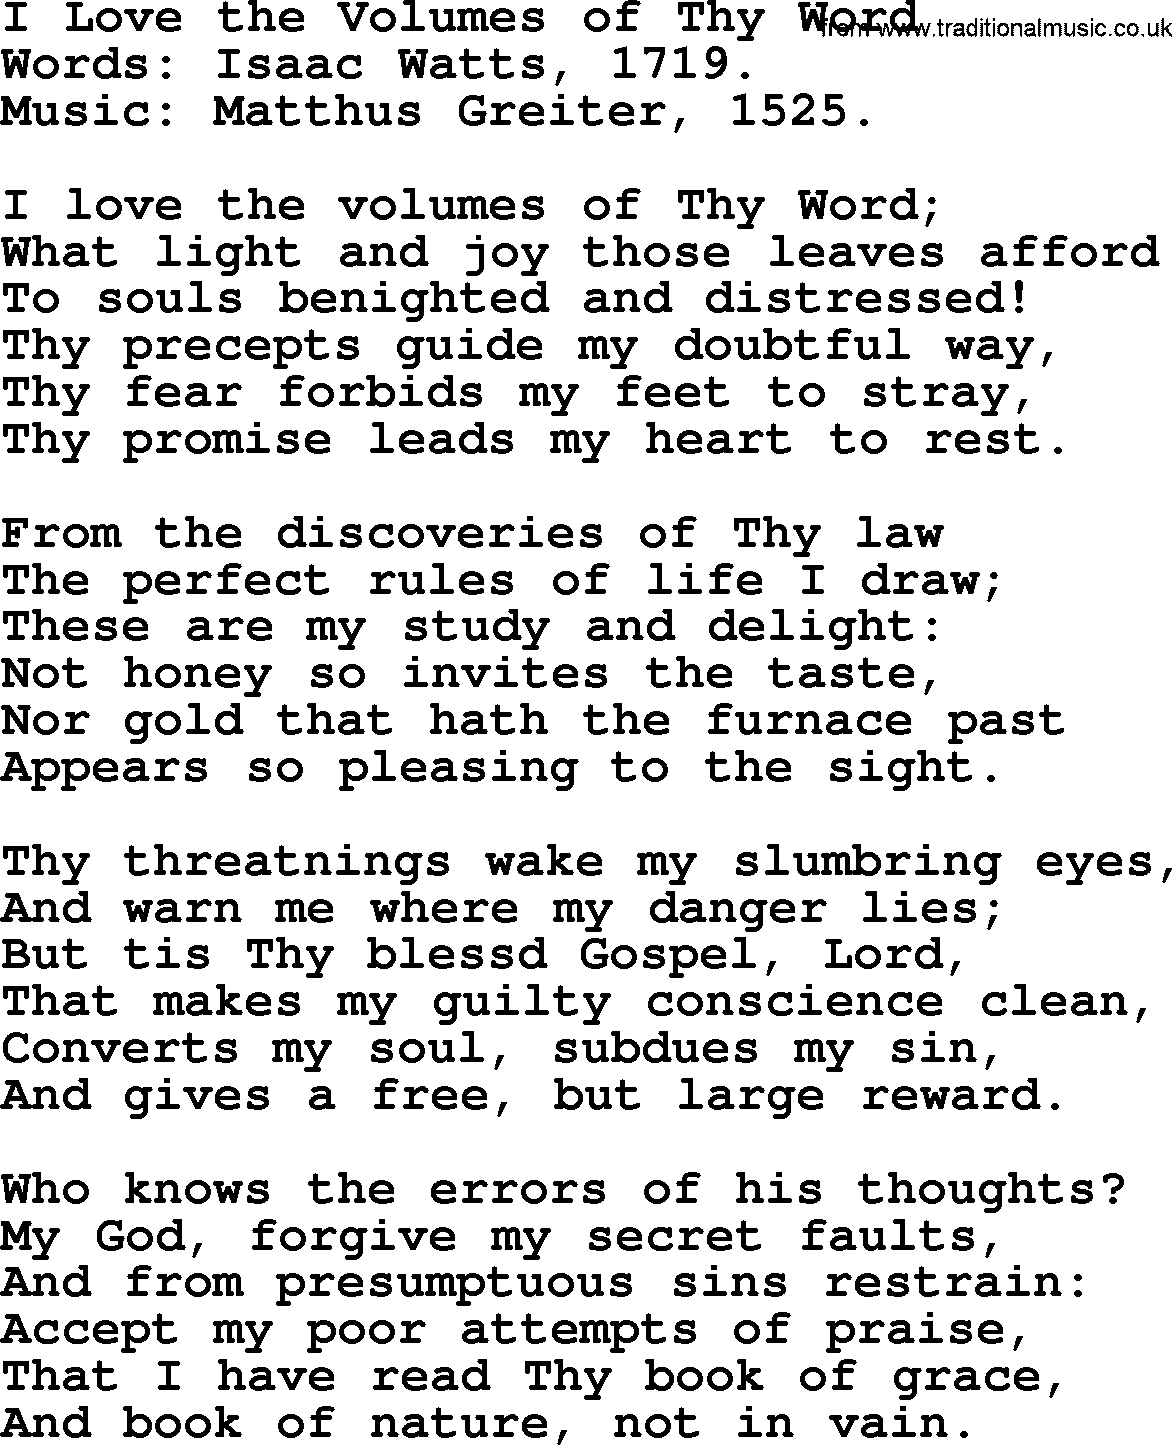 Isaac Watts Christian hymn: I Love the Volumes of Thy Word- lyricss